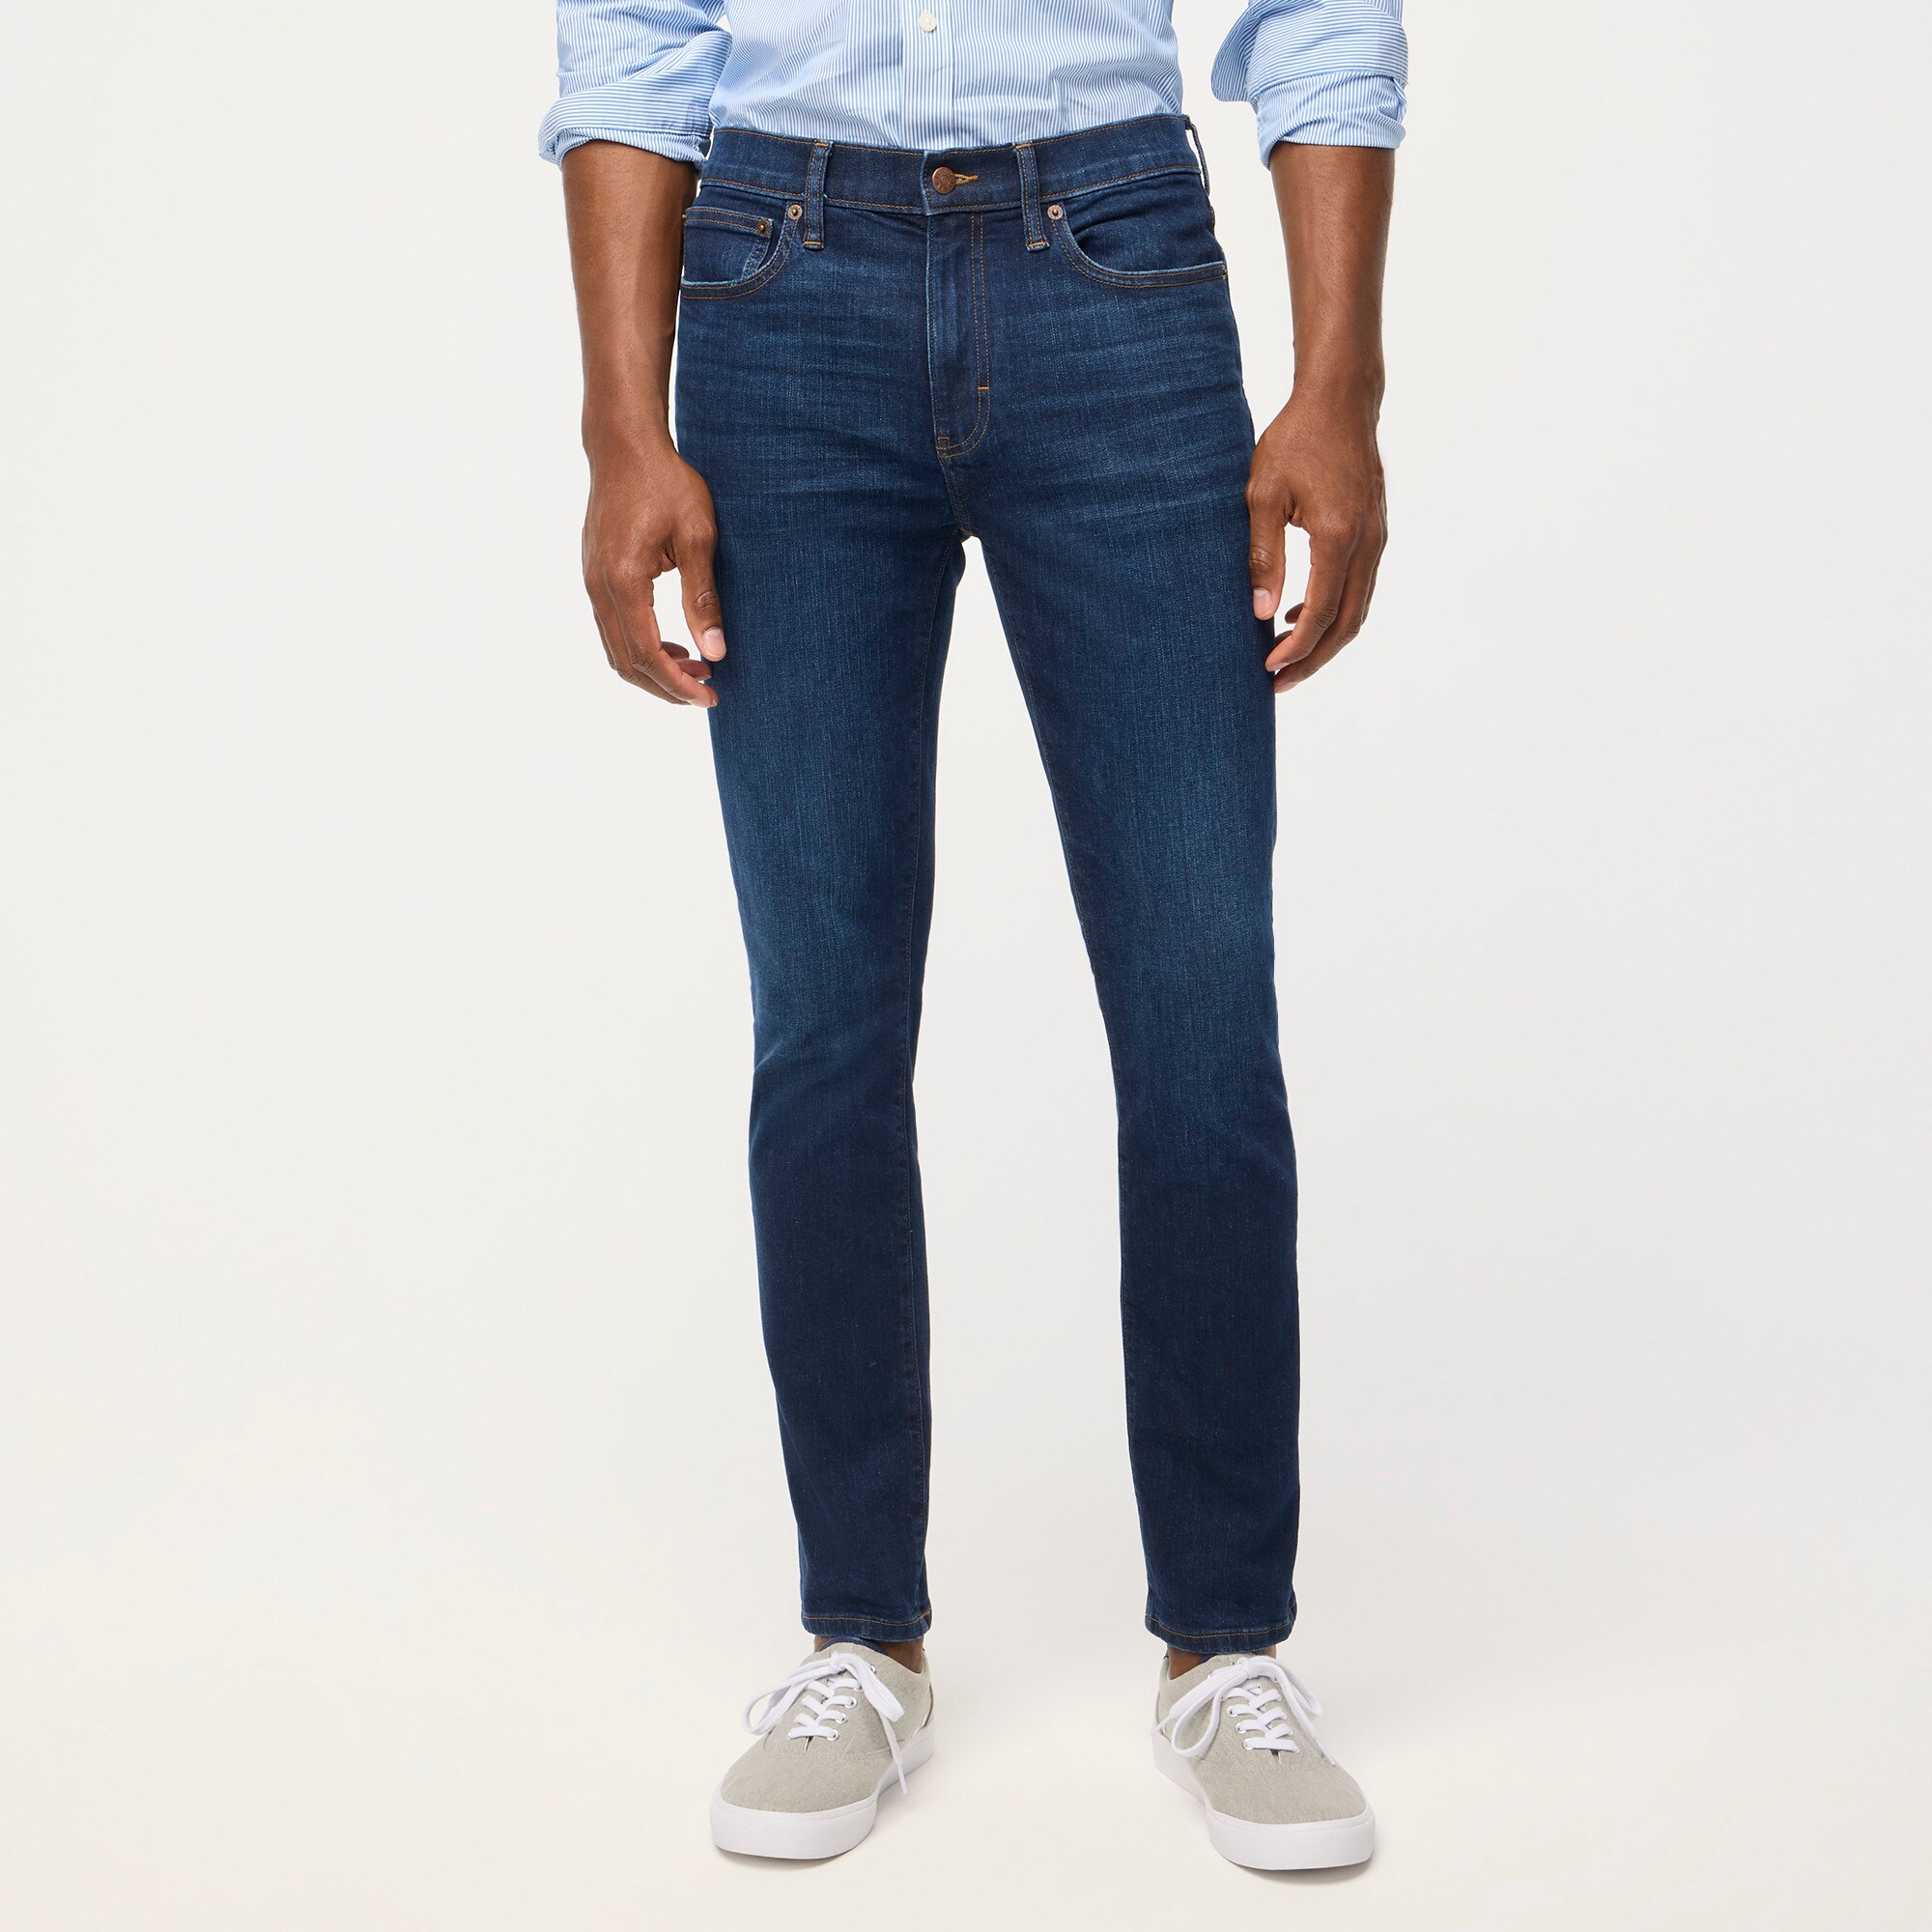  Skinny-fit jean in signature flex